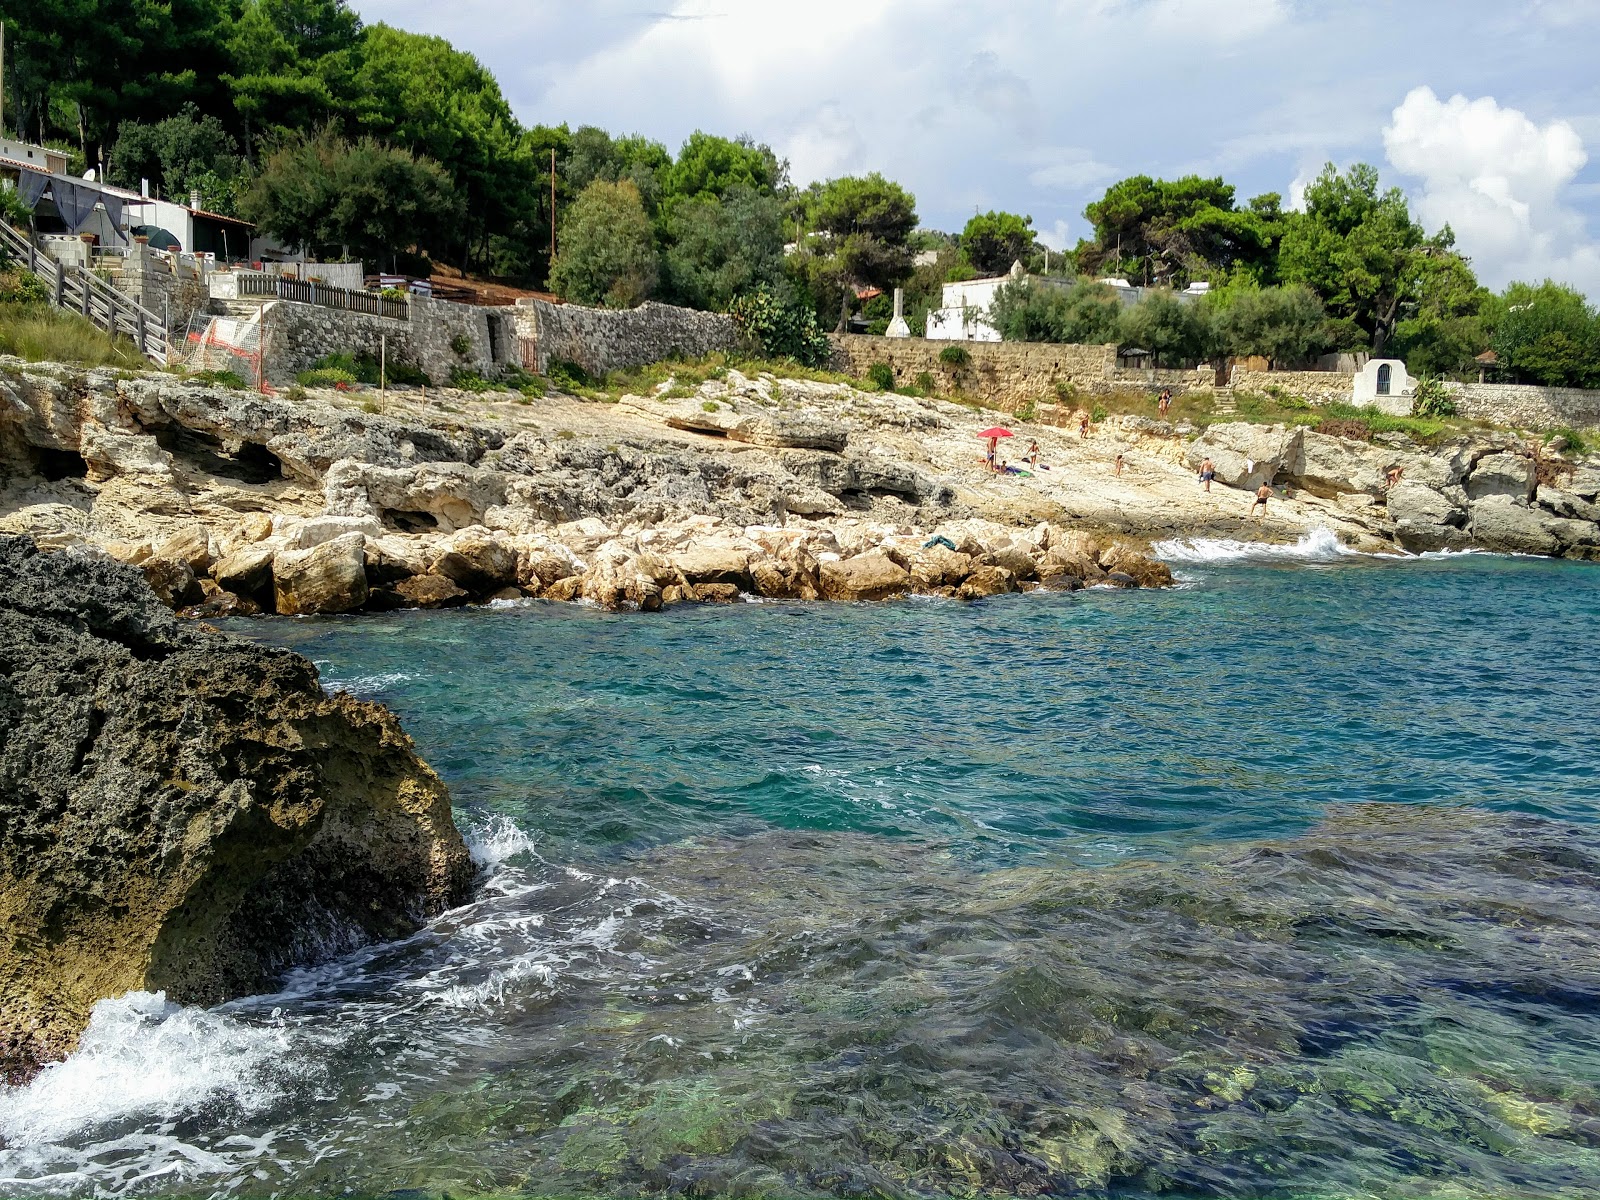 Foto de Spiaggia di Chianca Liscia ubicado en área natural